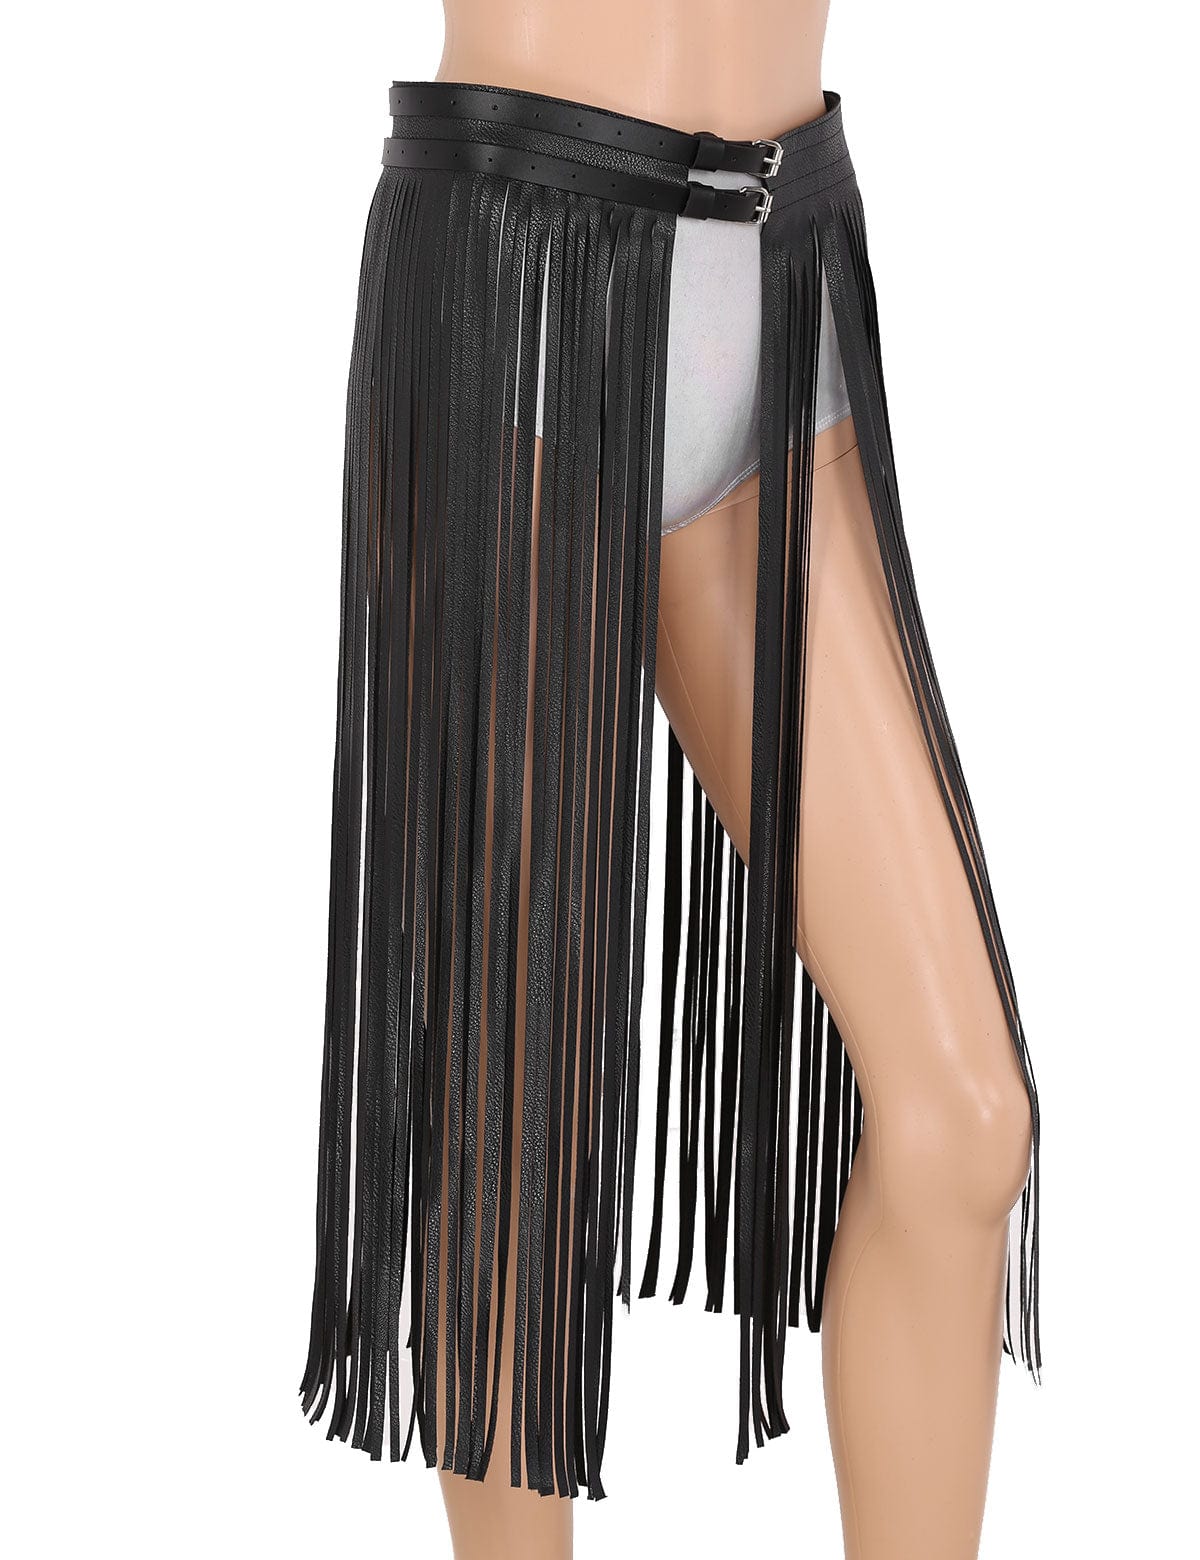 Kinky Cloth Leather Buckles Long Fringe Skirt